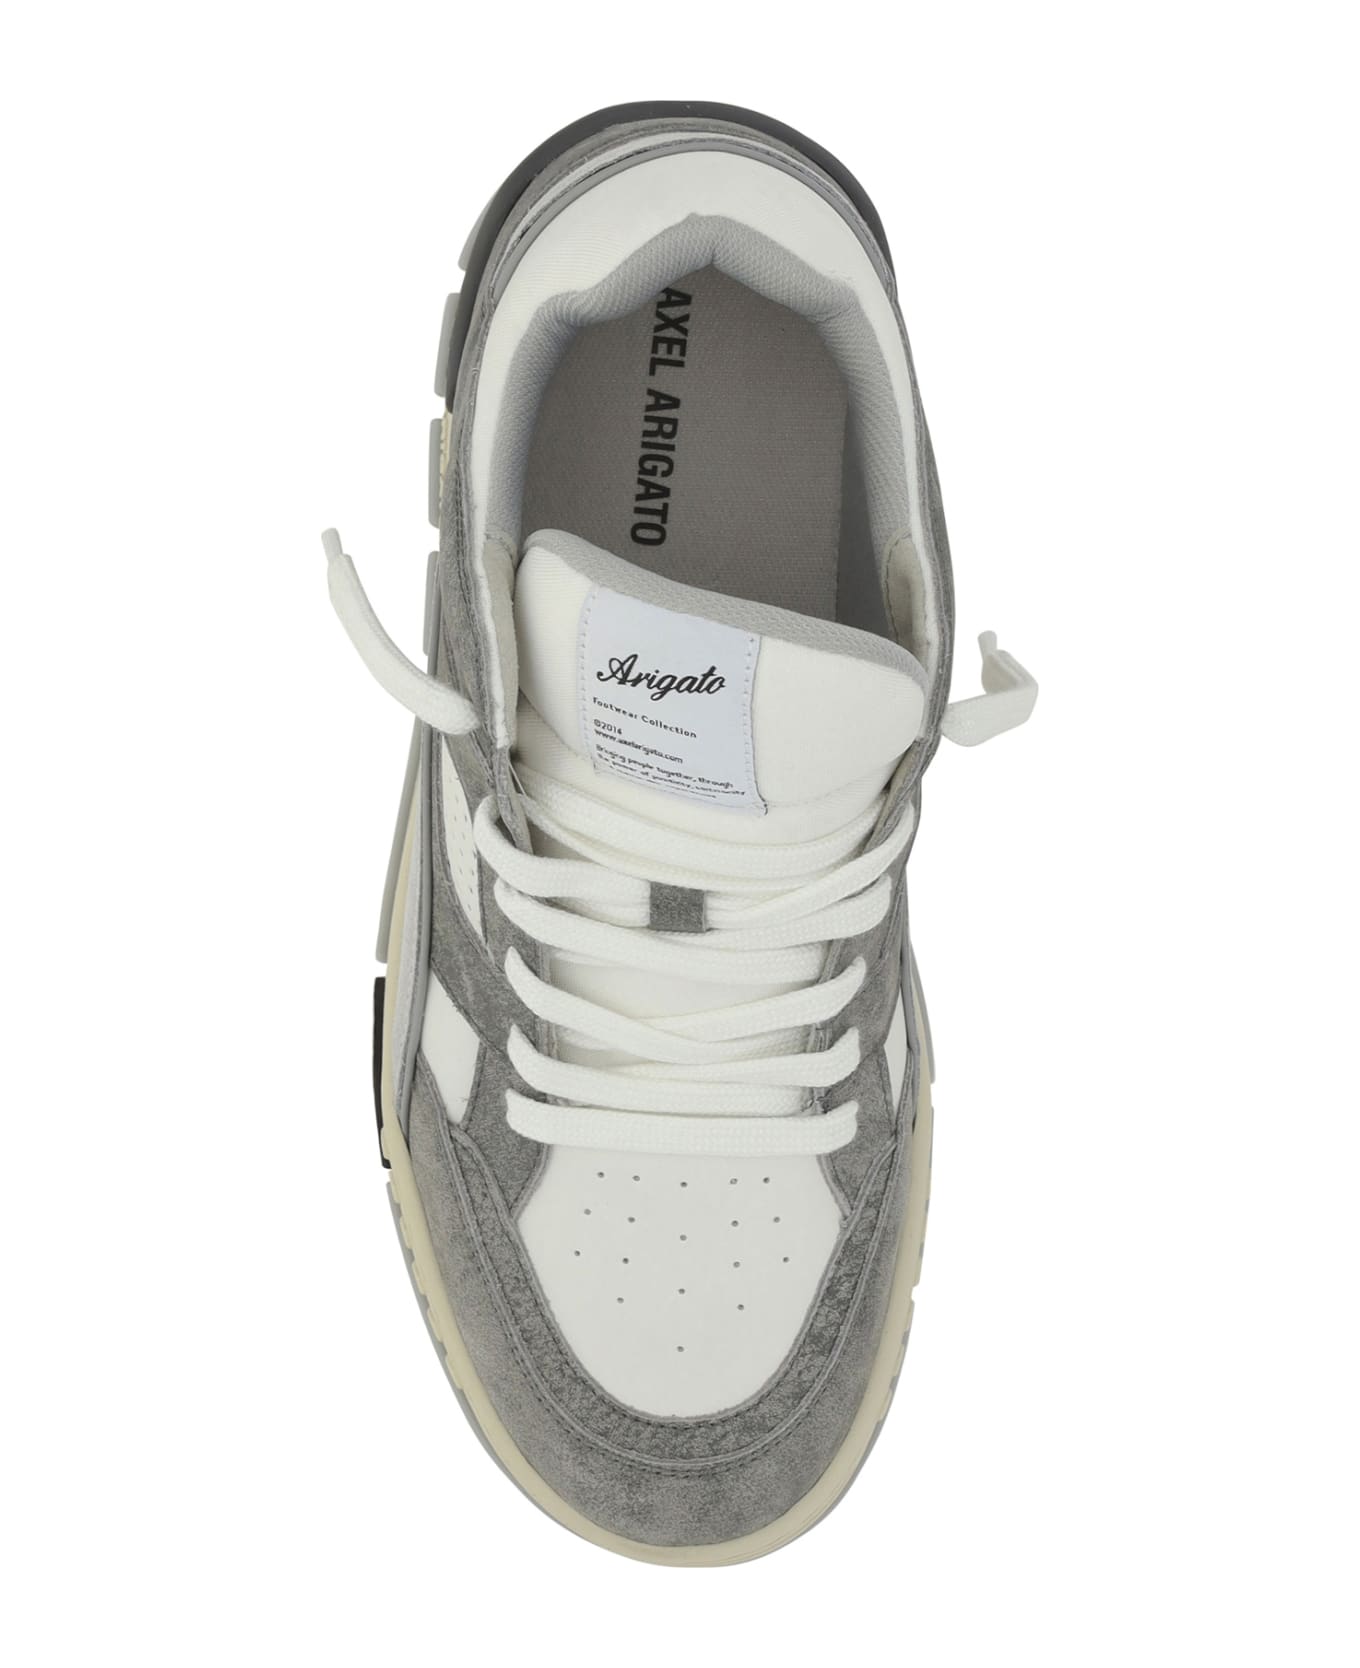 Axel Arigato Area Lo Sneakers - White/grey